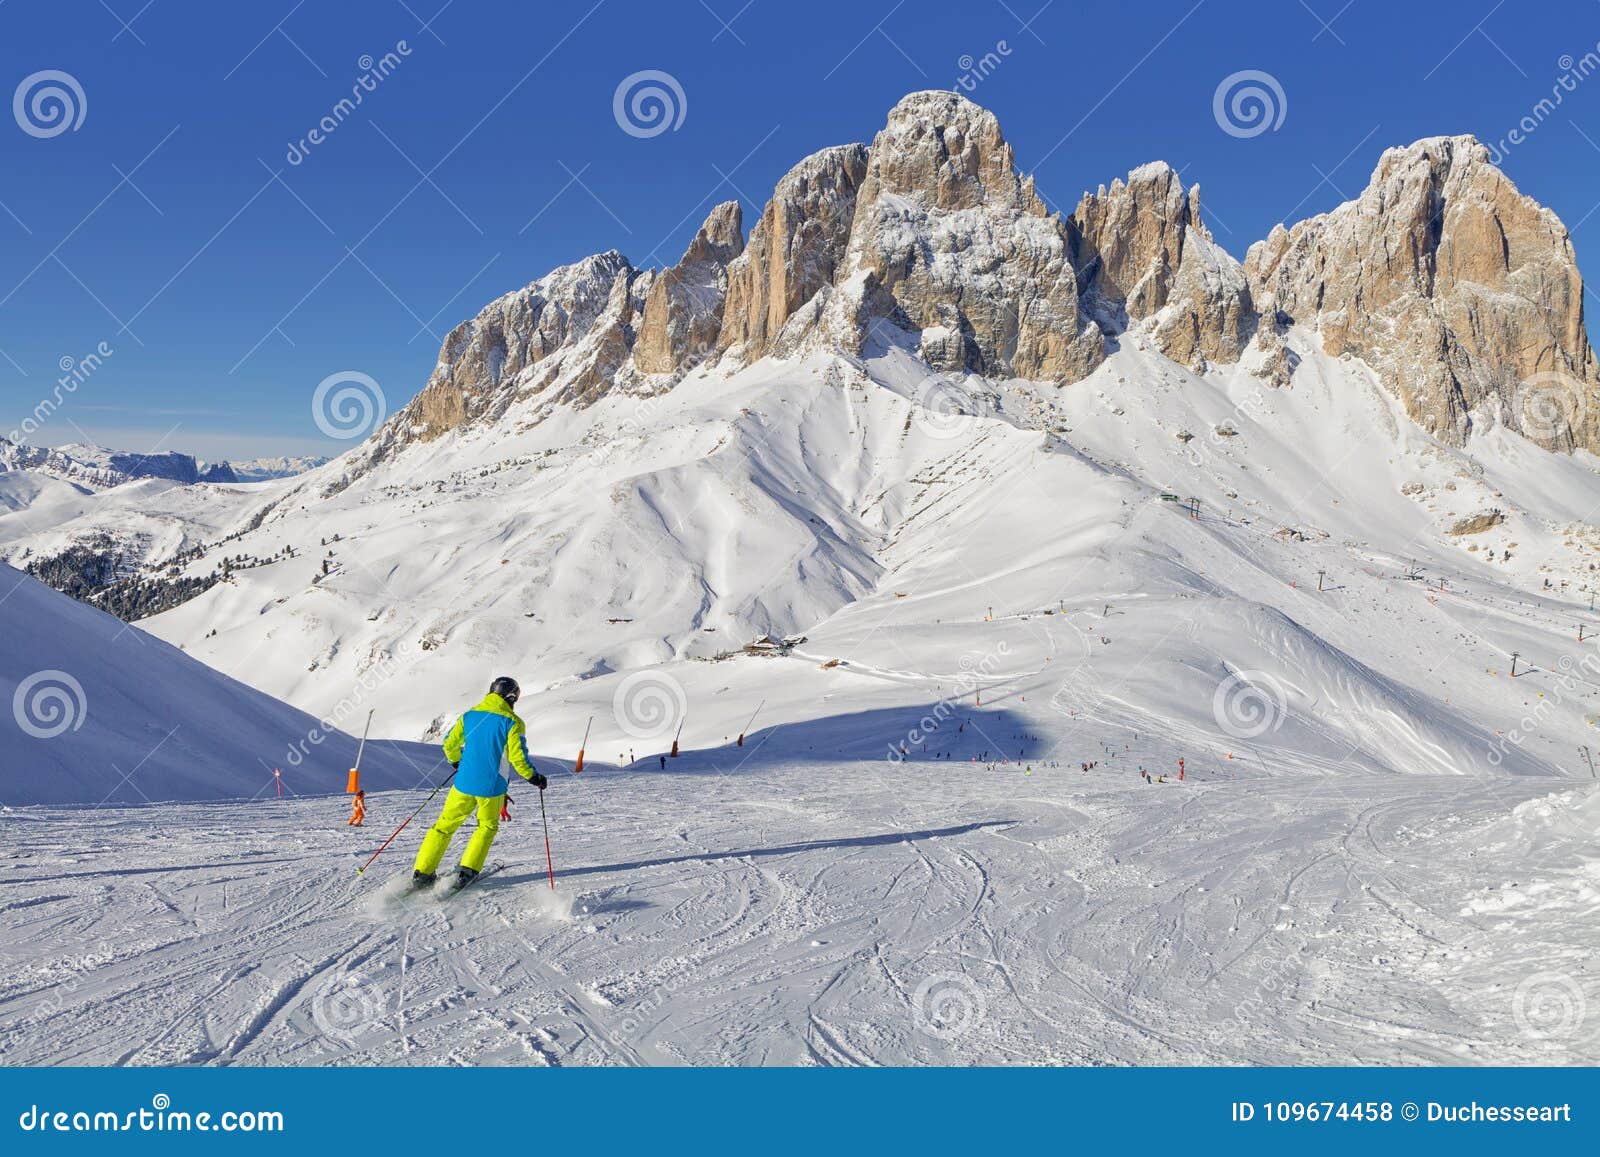 view of the sassolungo langkofel group of the italian dolomites from the val di fassa ski area, trentino-alto-adige region, italy